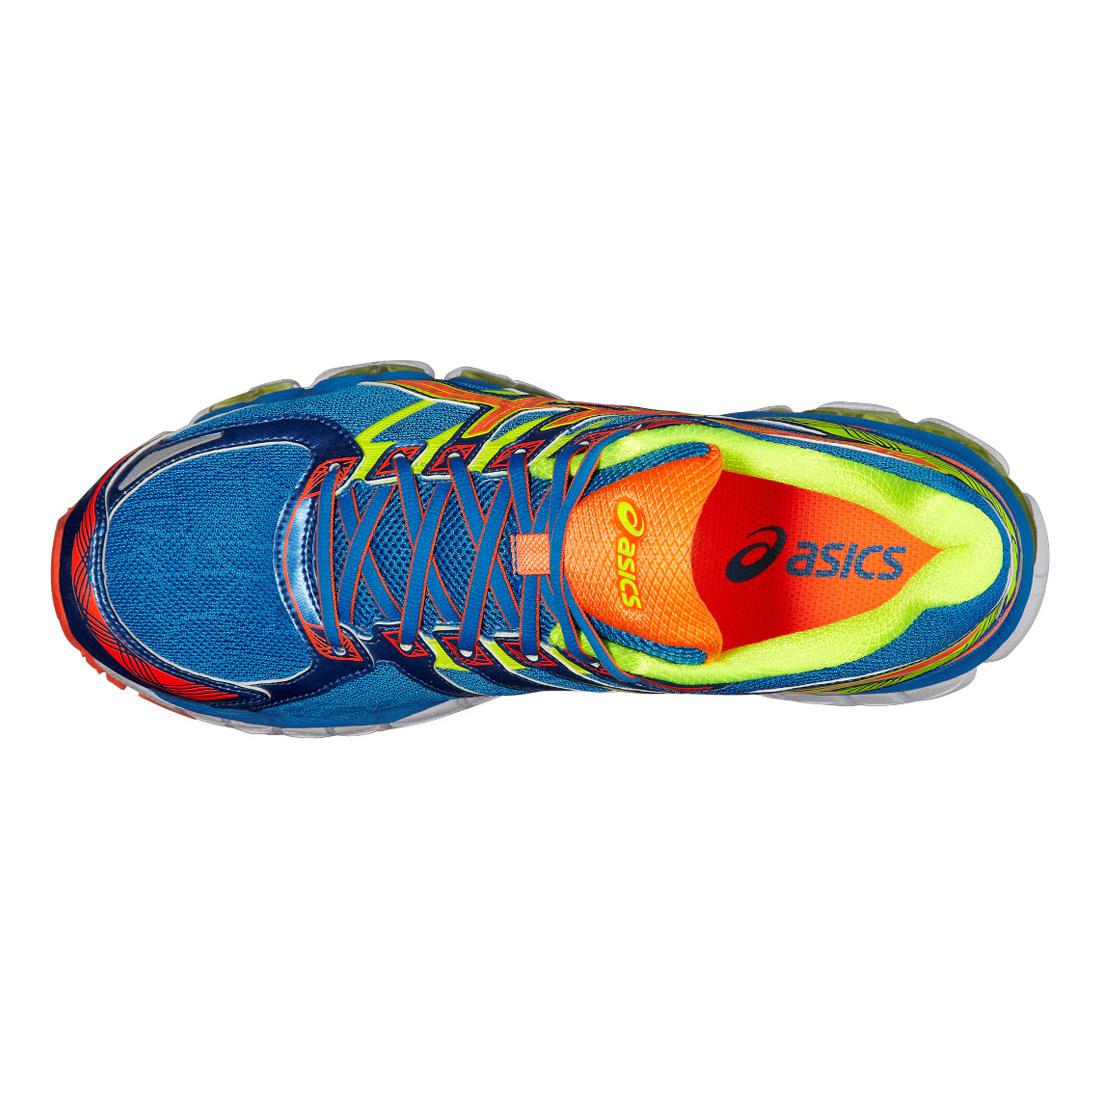 Asics Mens GEL-Evate 3 Running Shoes - Blue/Yellow - Tennisnuts.com